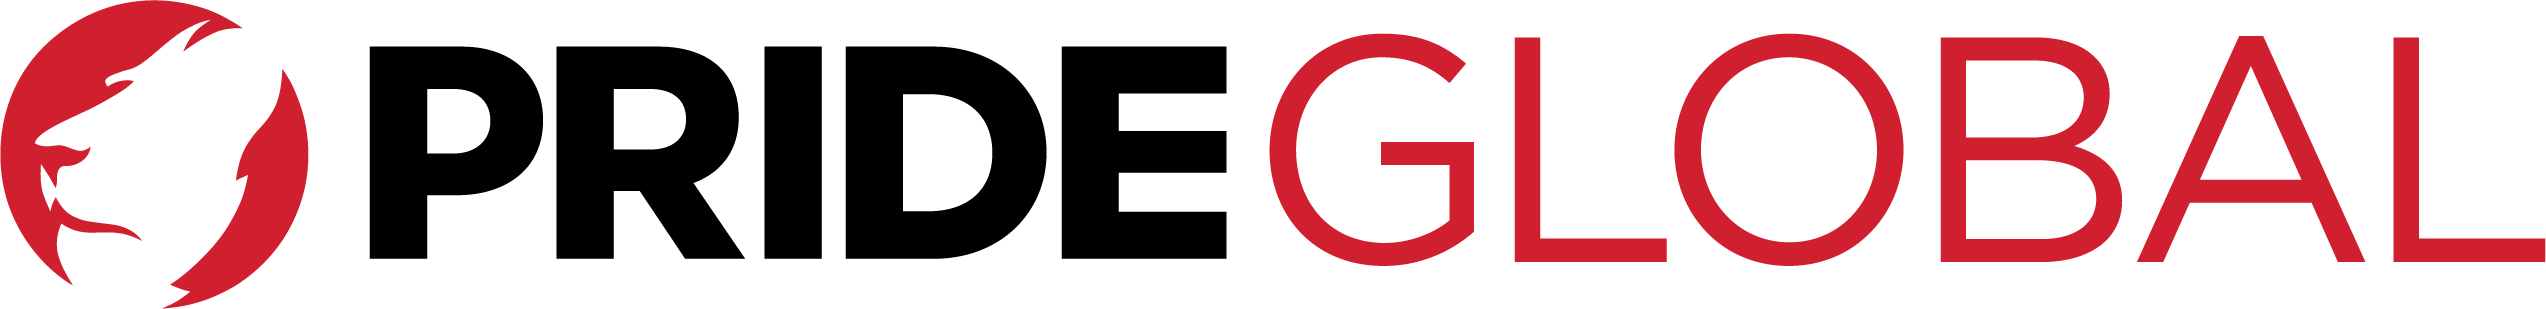 pride global logo